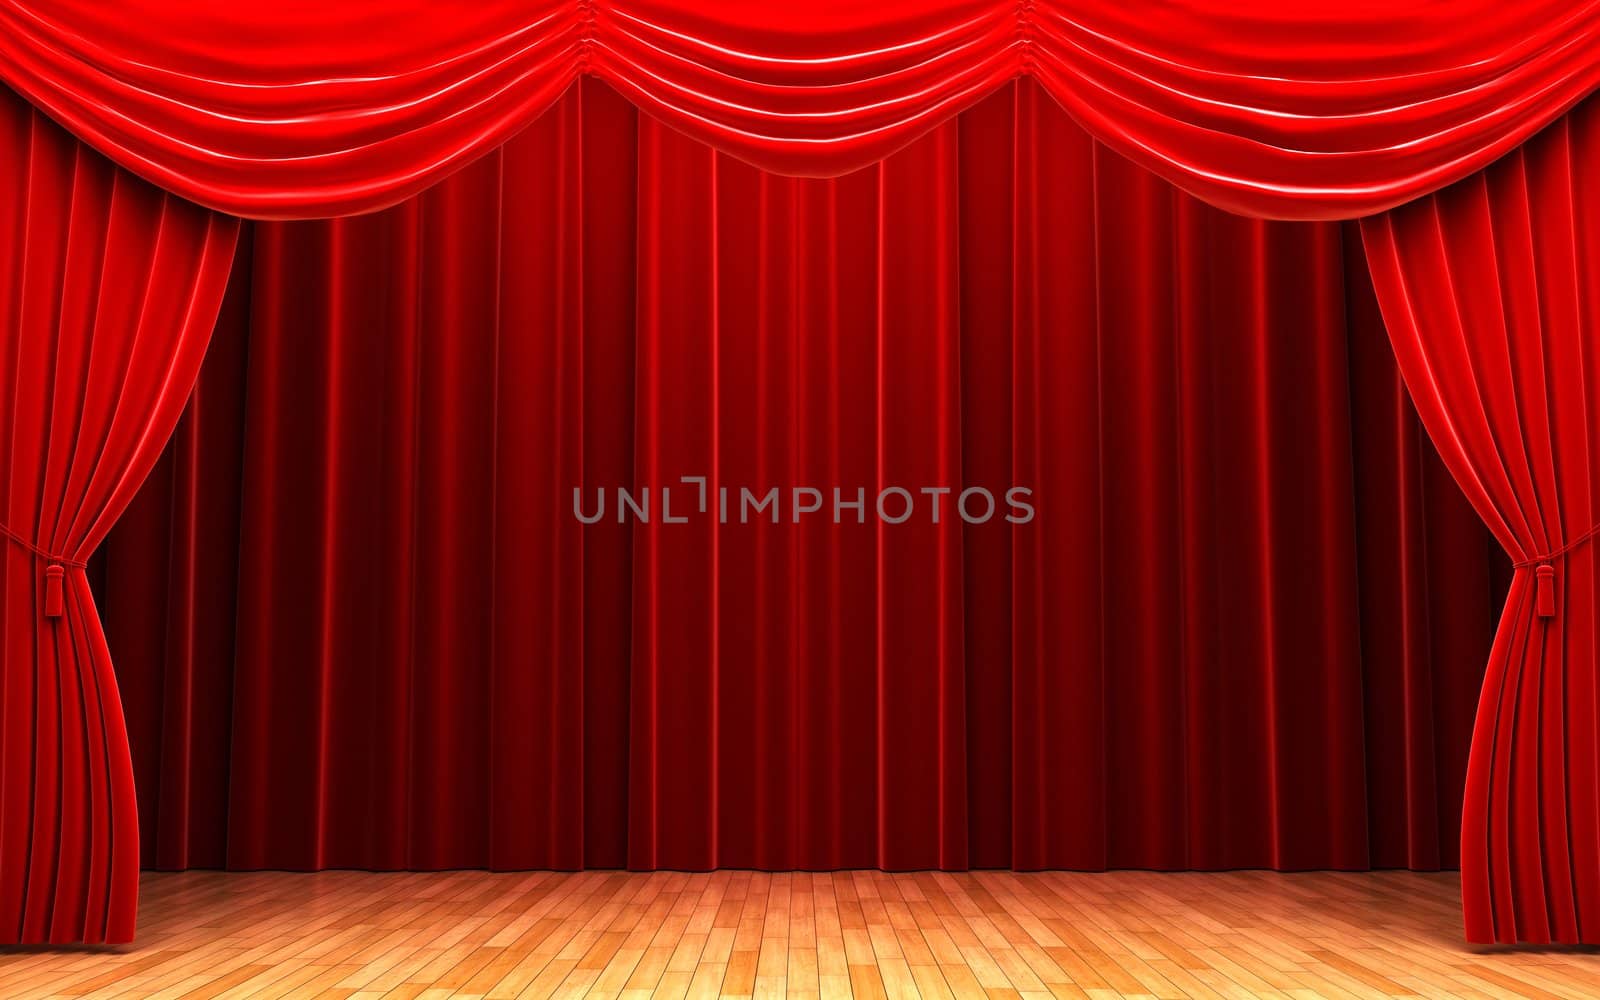 Red velvet curtain opening scene by icetray